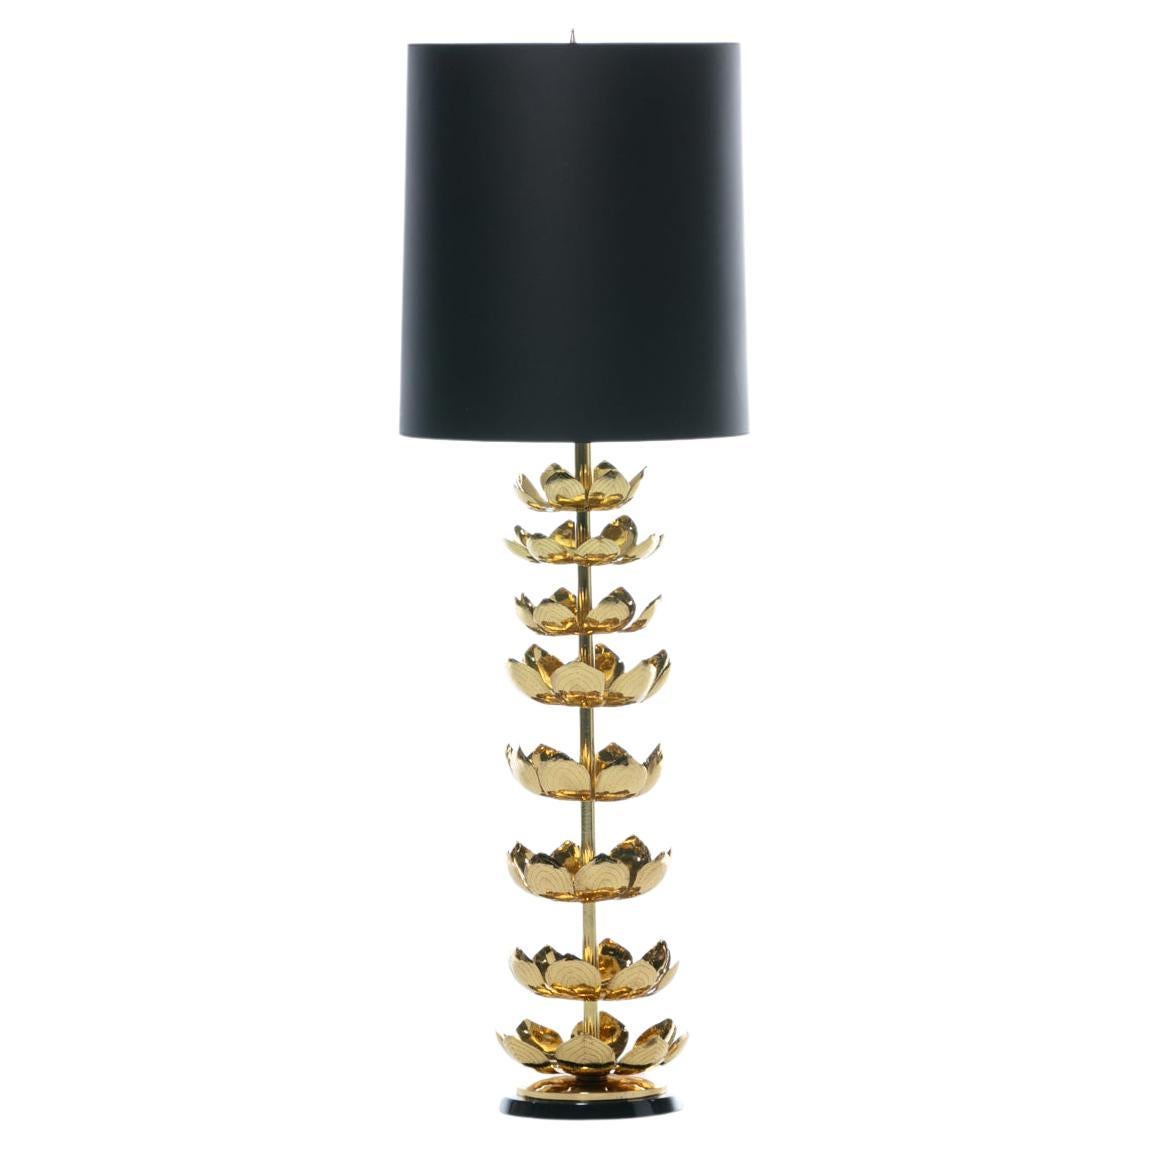 Tall Brass Feldman Lighting Lamp with Lotus Flower Layered Detail c. 1955 For Sale